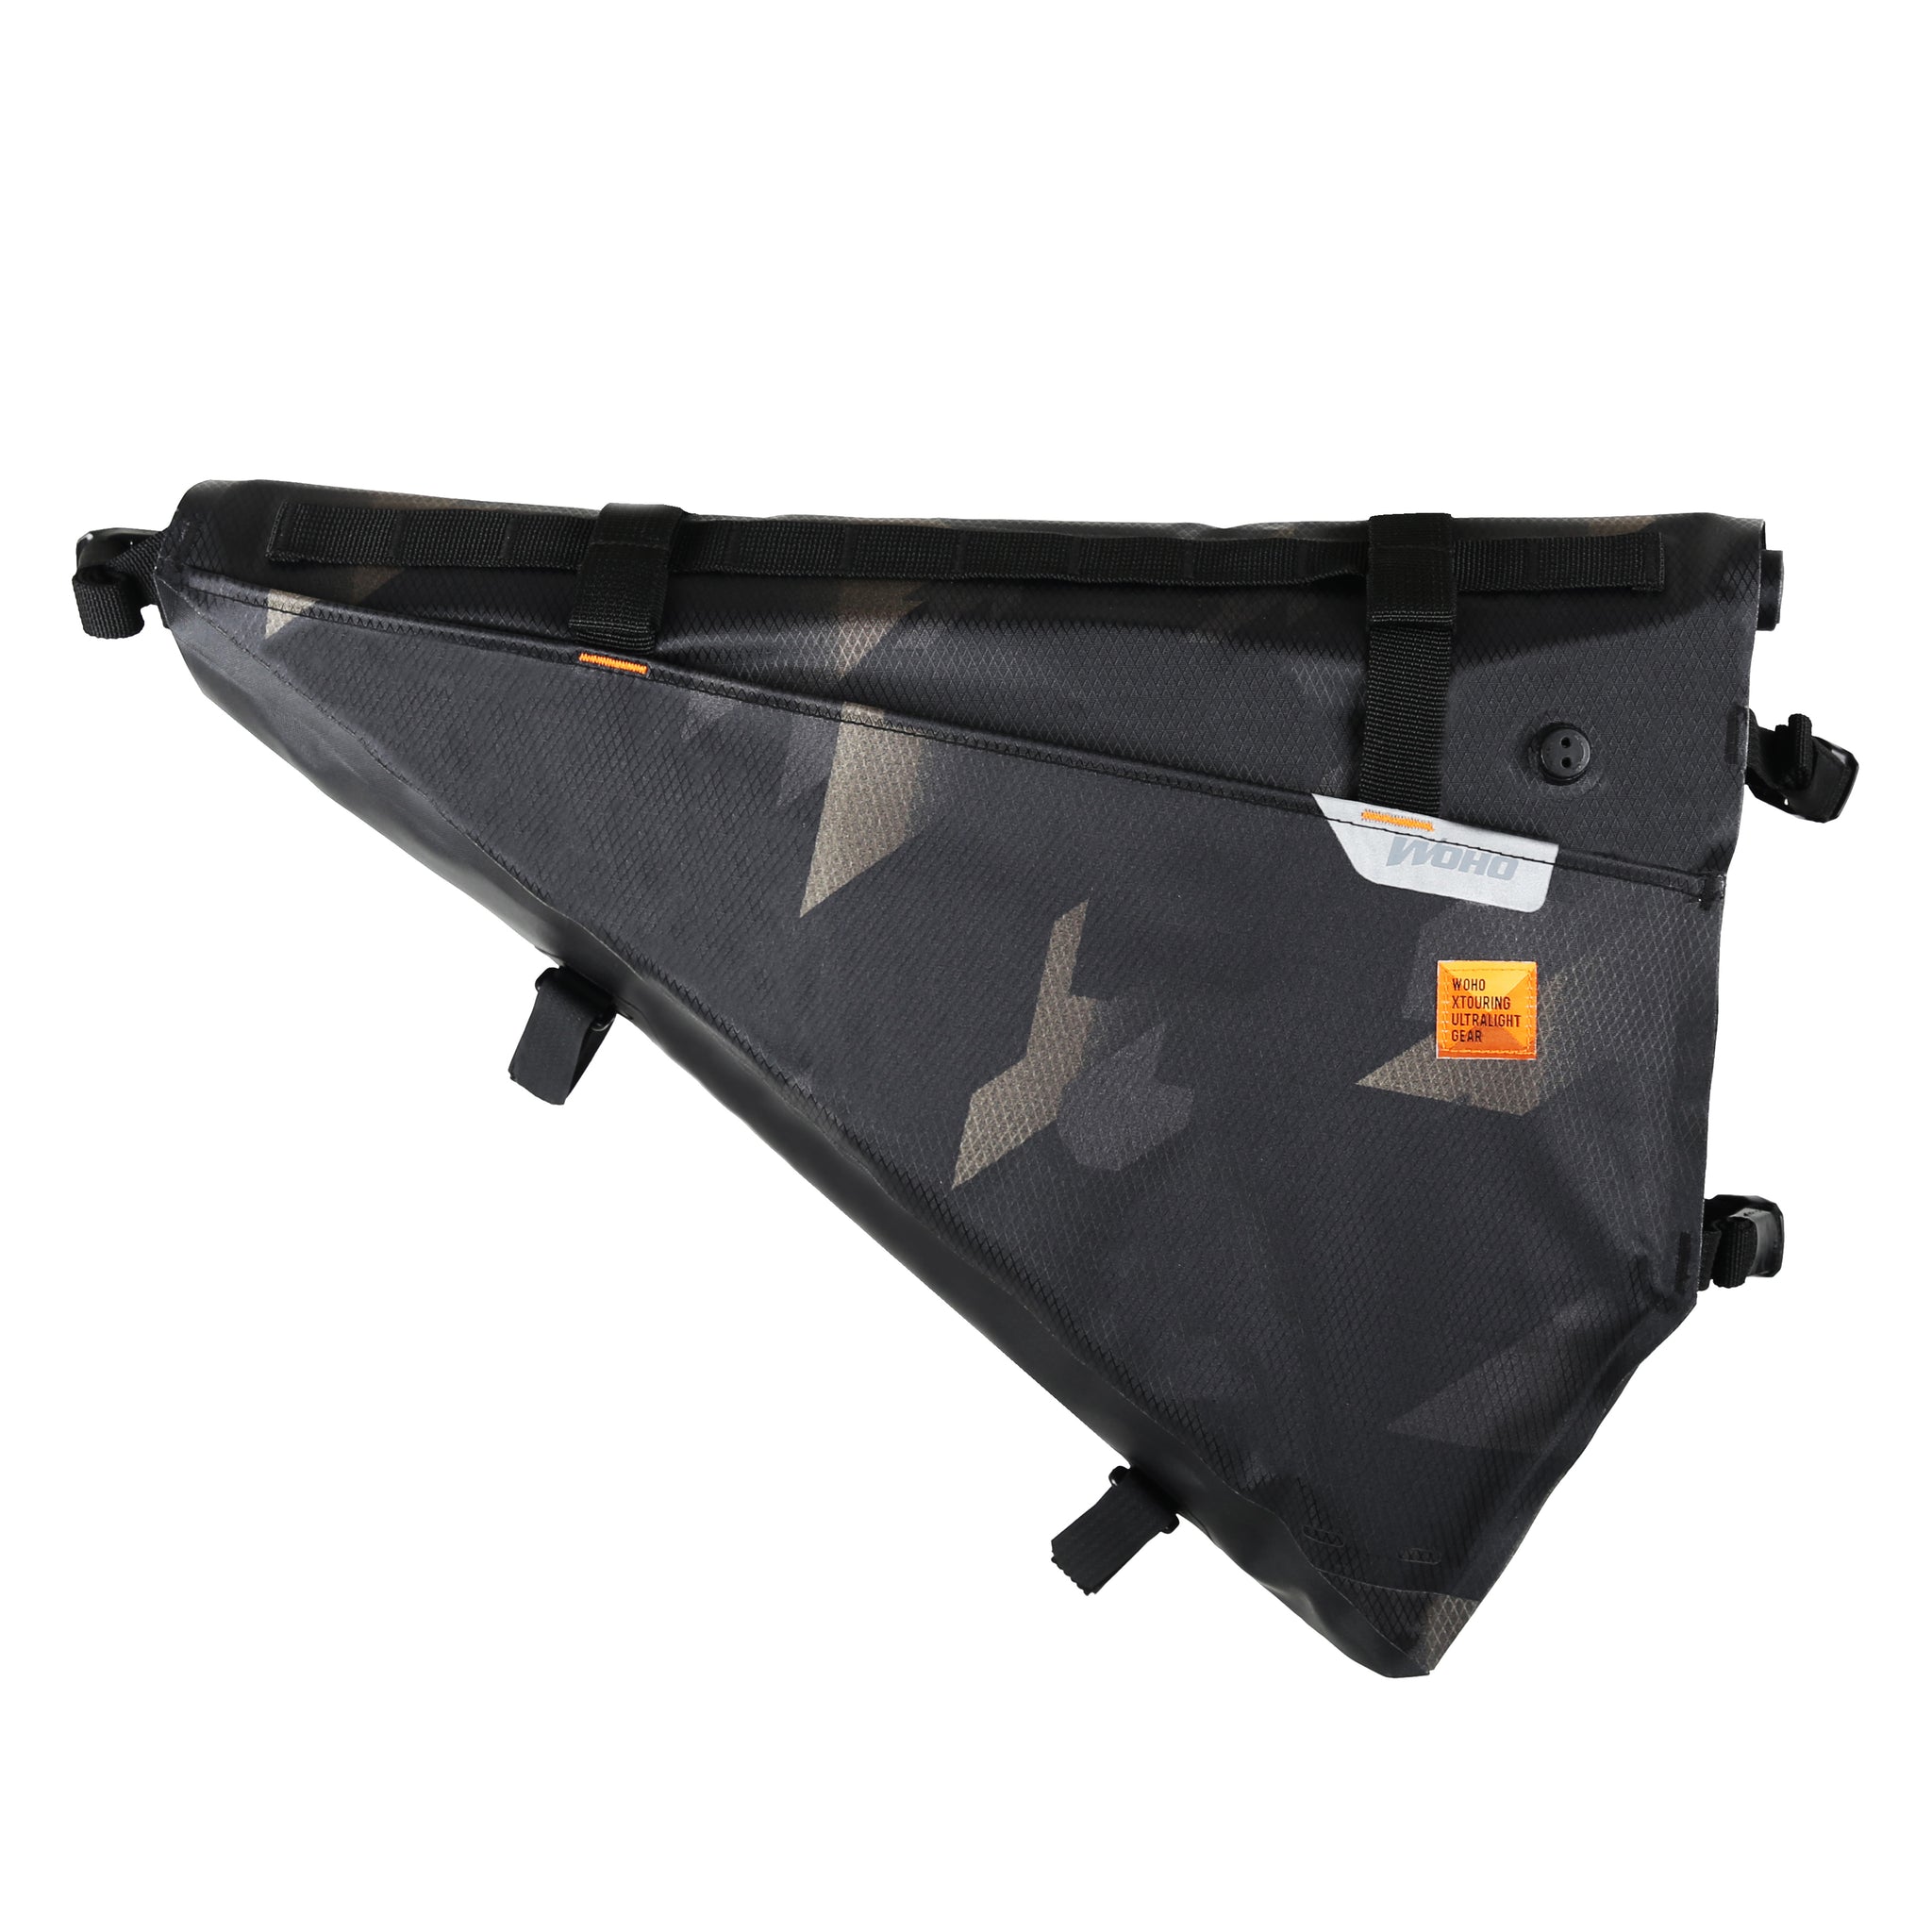 Osprey Cyber Port Backpack Laptop Tablet Daypack Travel Gray Bag | eBay